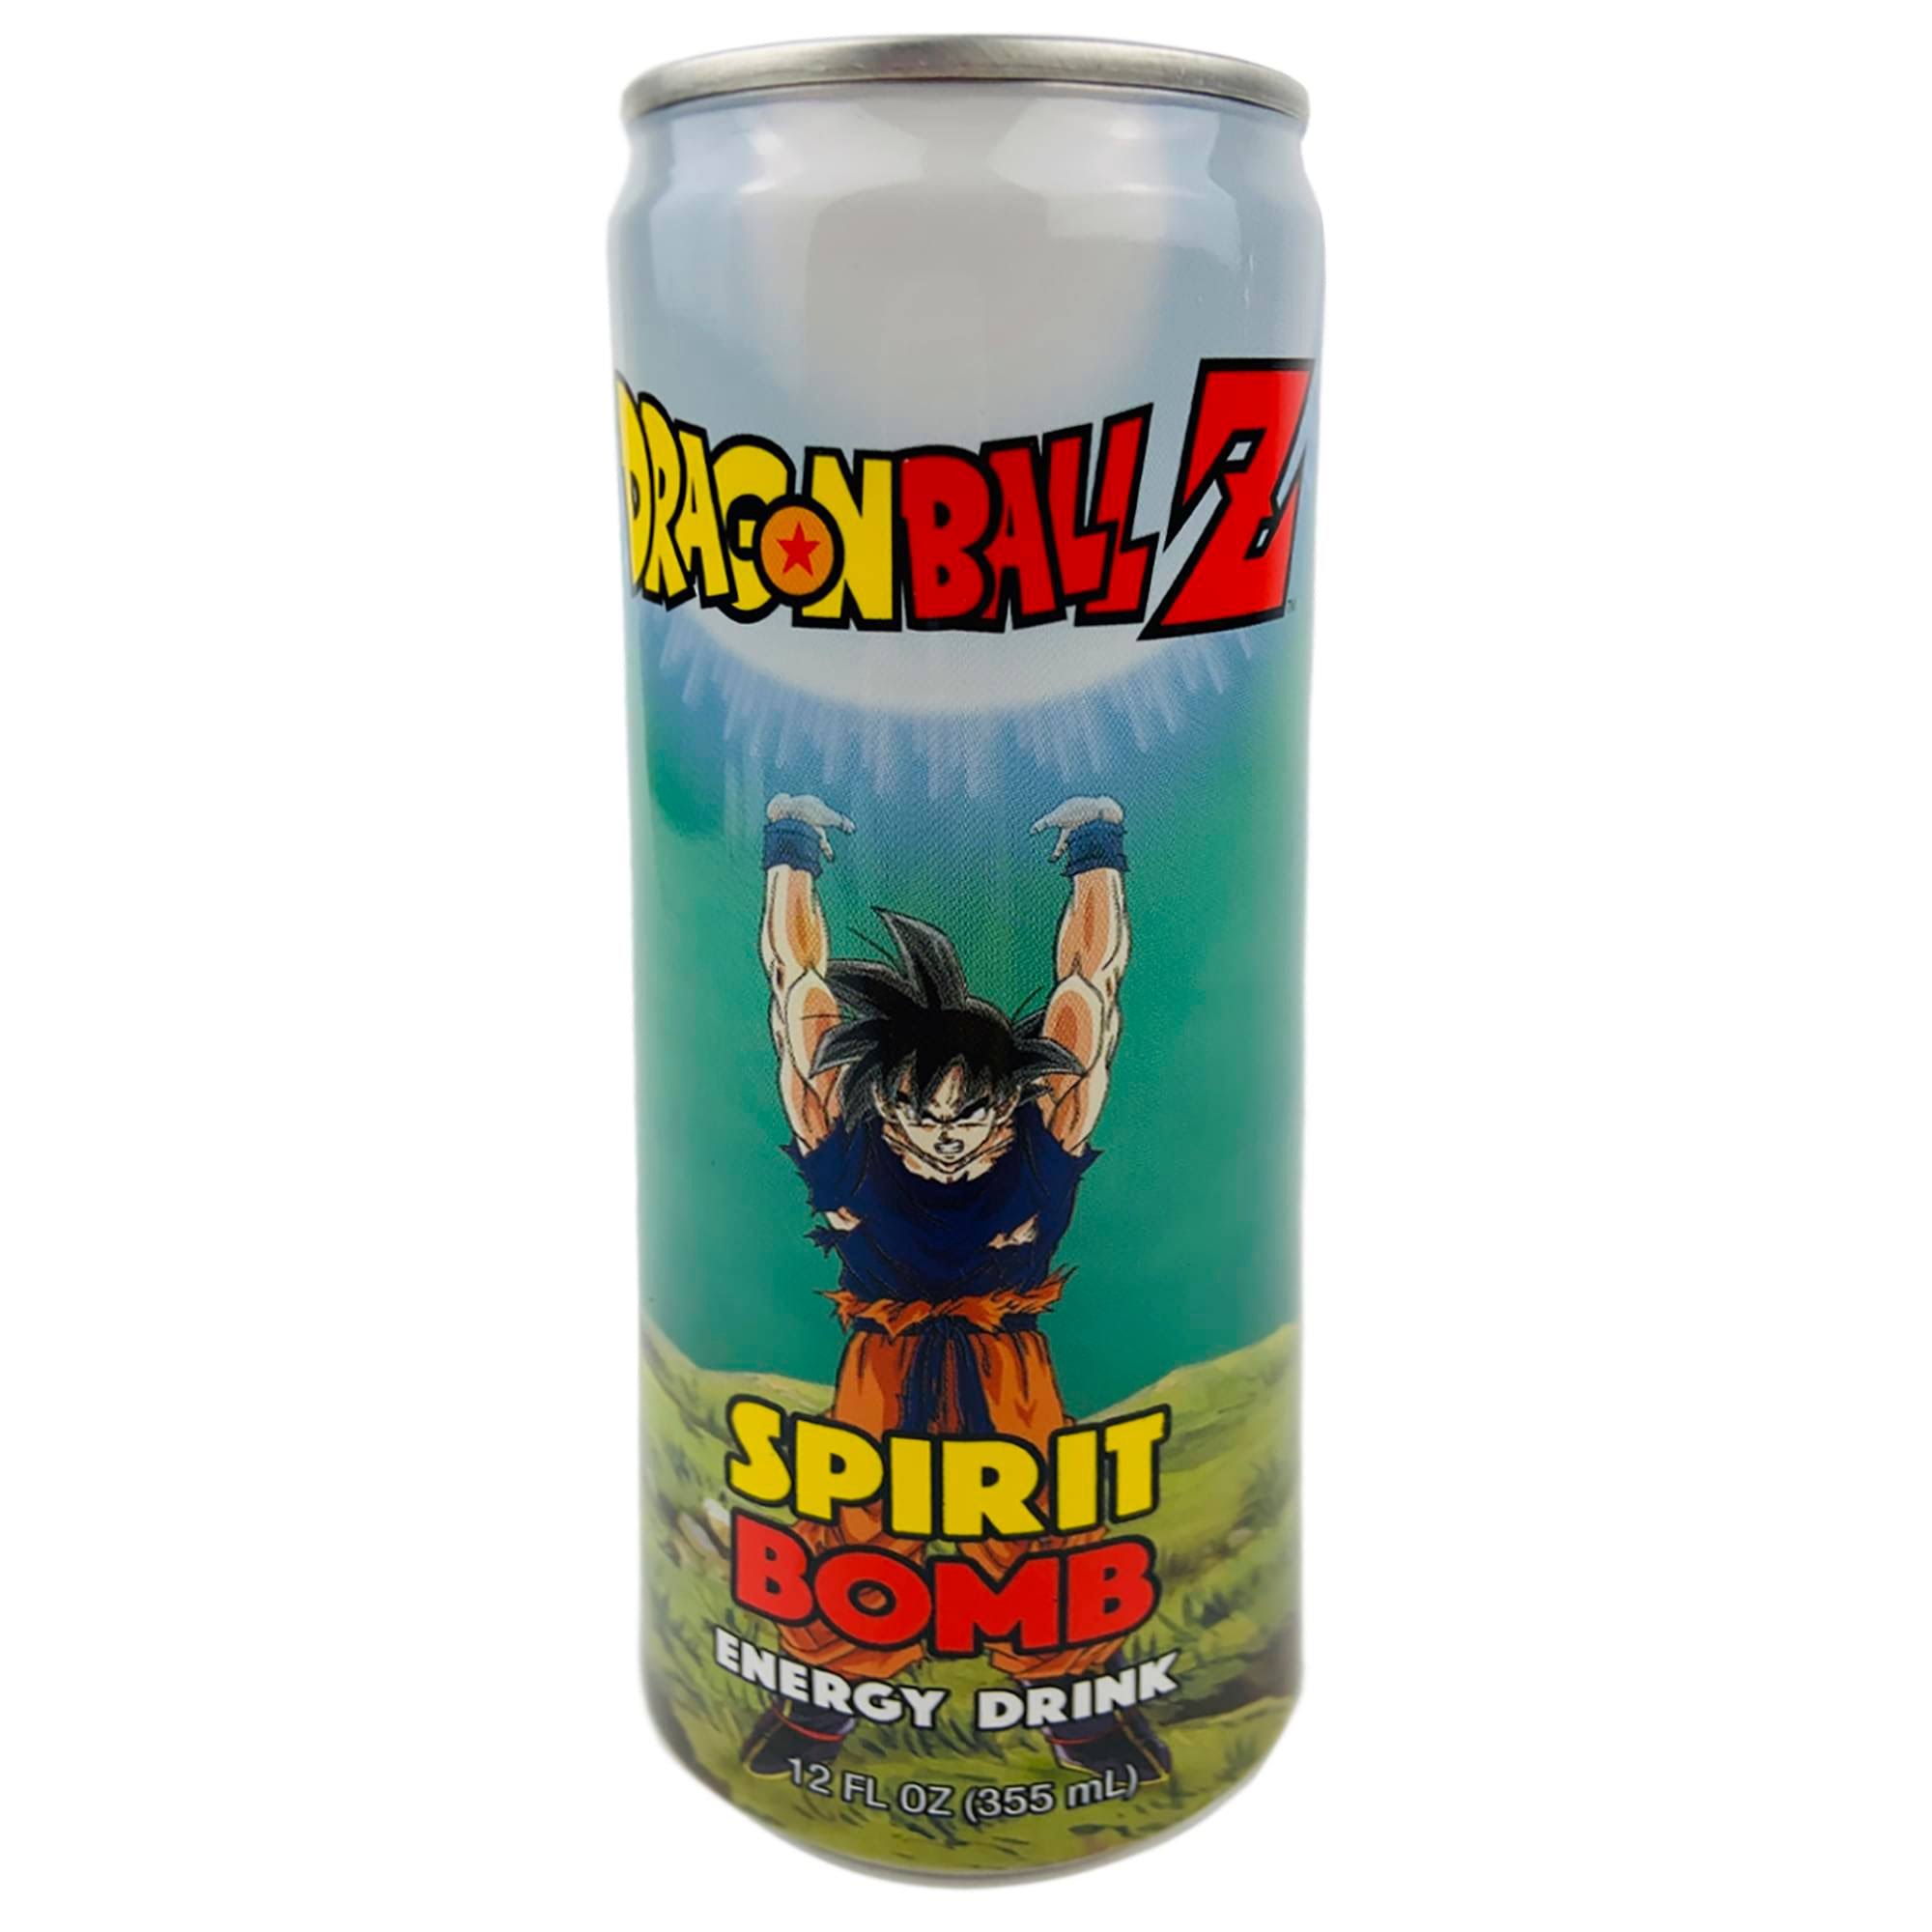 Boston America Dragon Ball Z Spirit Bomb Energy Drink (355ml)